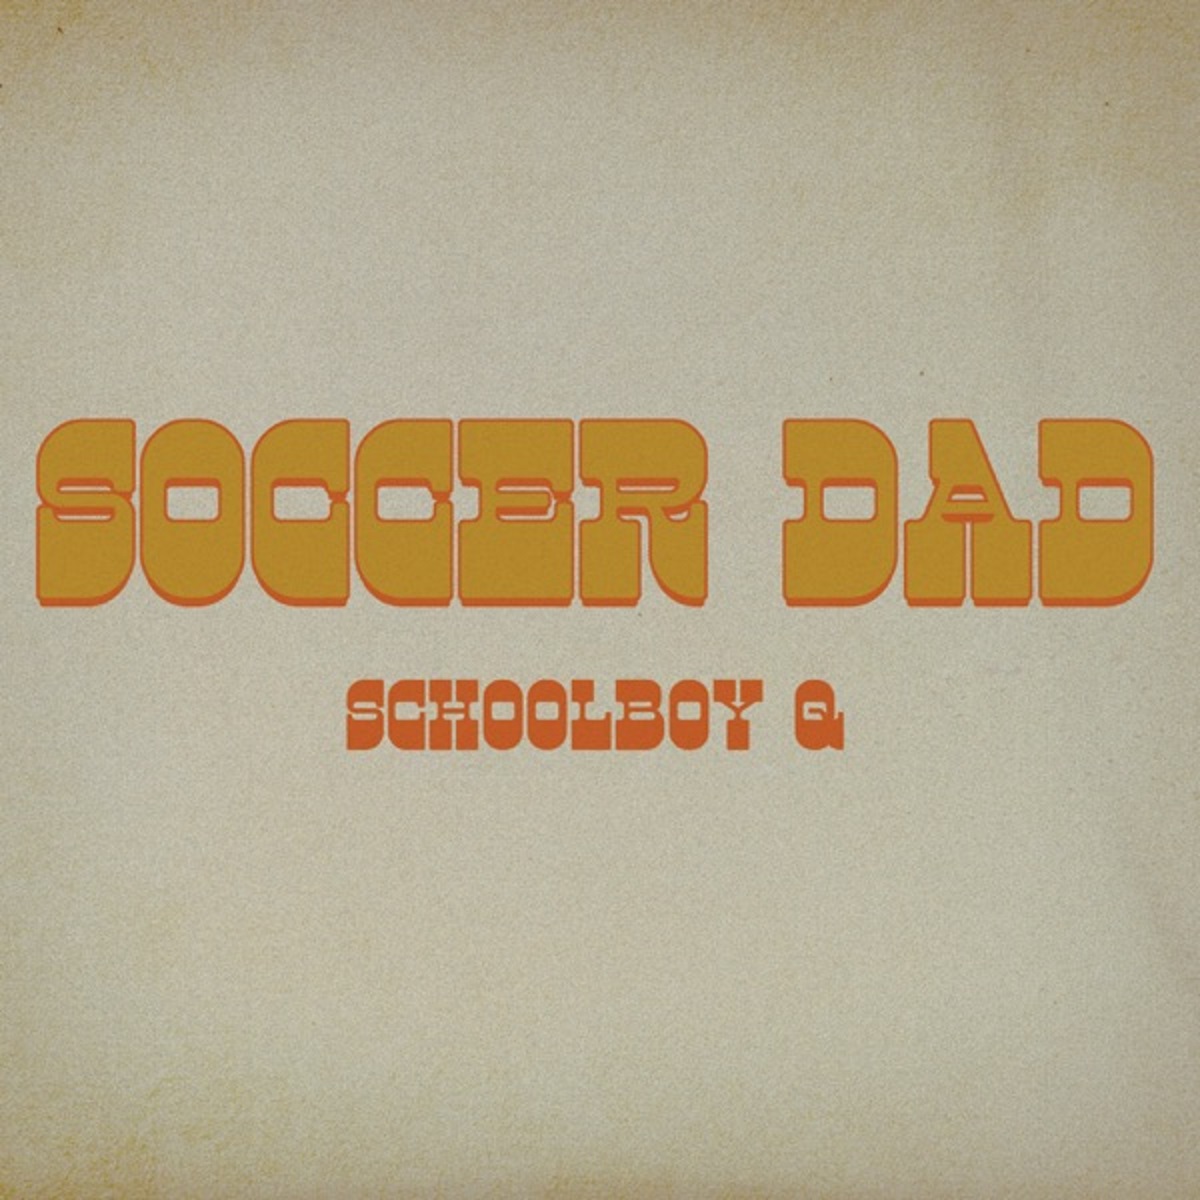 ScHoolboy Q returns with new single Soccer Dad